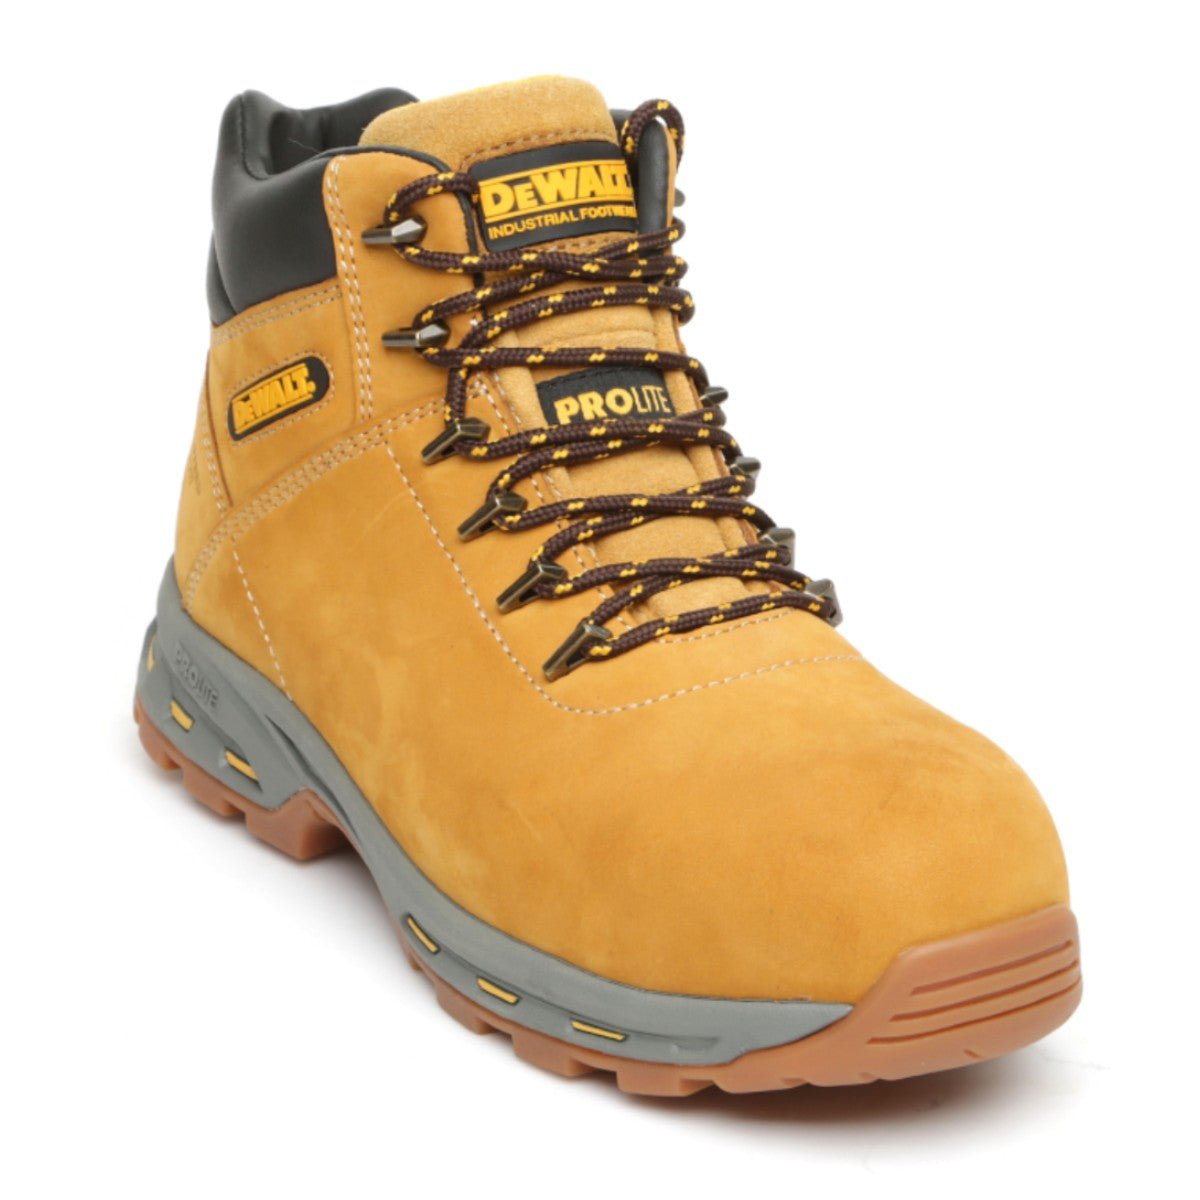 DeWalt Reno ProLite Safety Hiker Boot - Shoe Store Direct